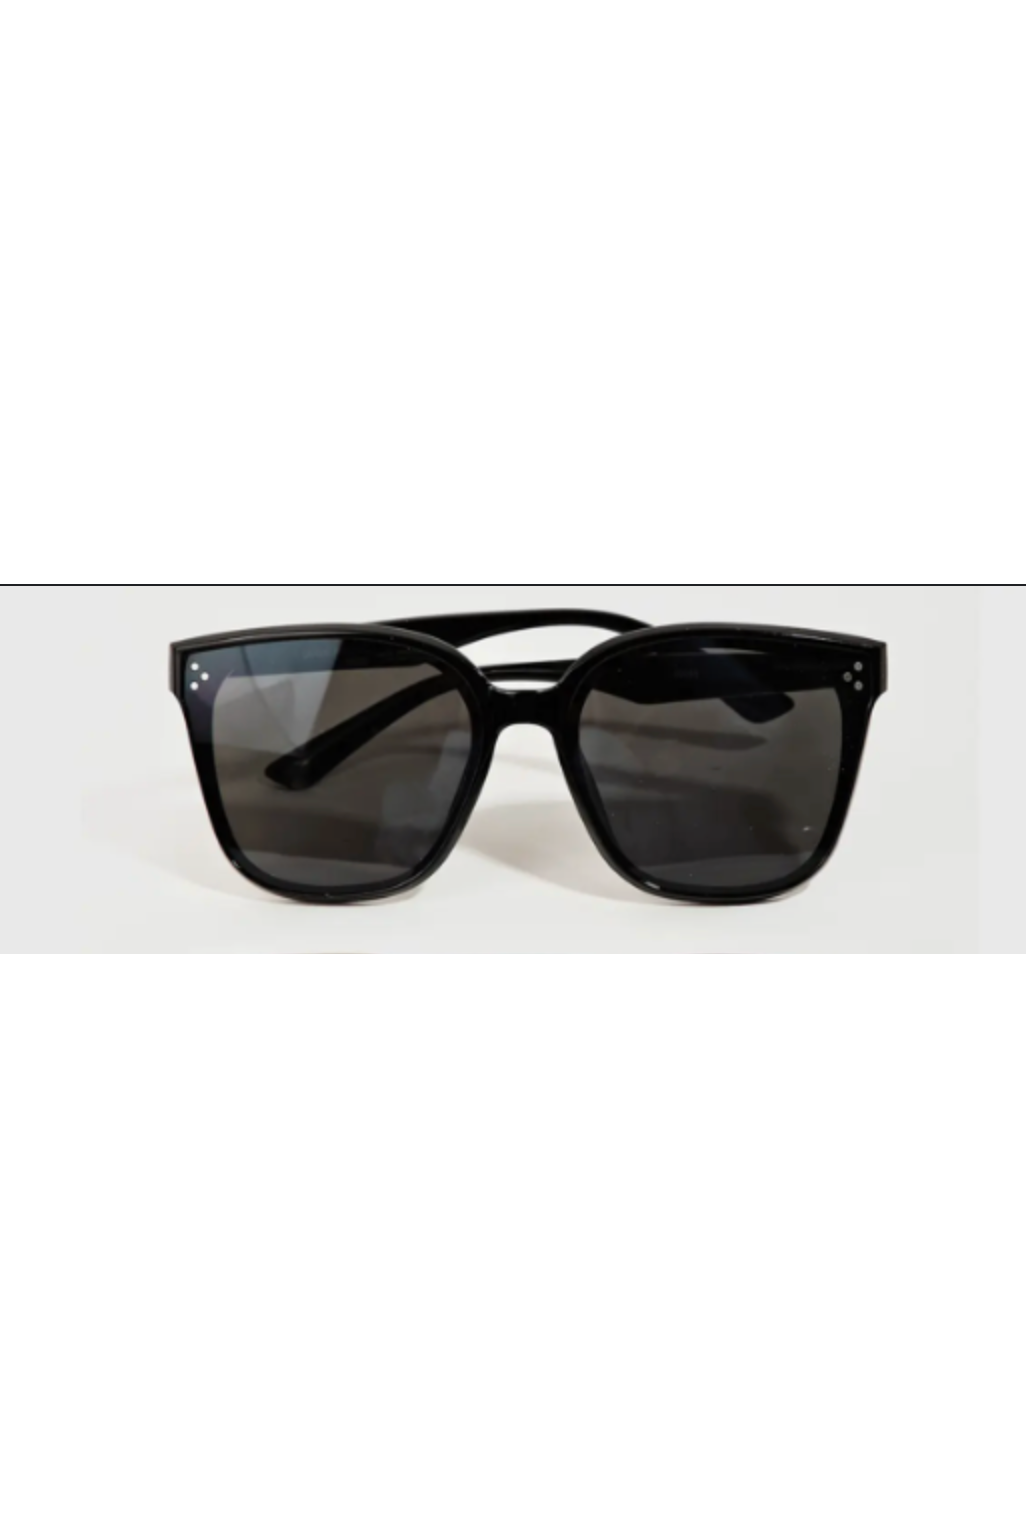 Fame  - Spexx Sunglasses - Black, Gray, Rose, Tortoise